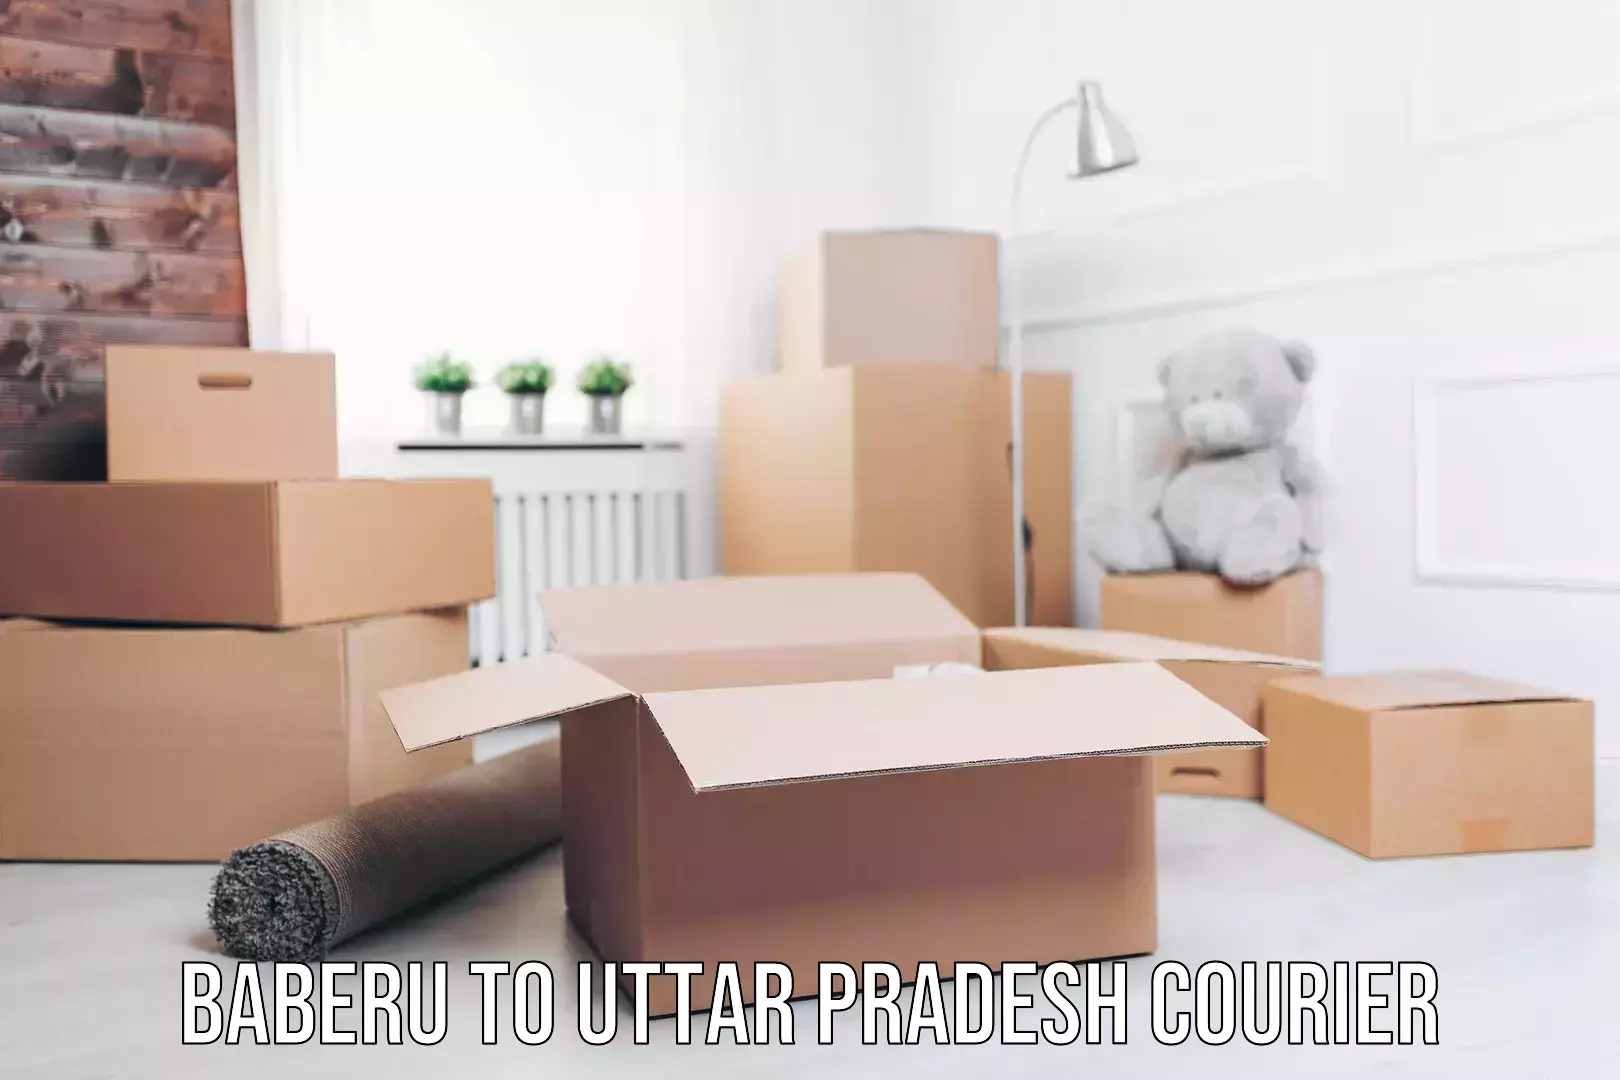 State-of-the-art courier technology Baberu to Uttar Pradesh